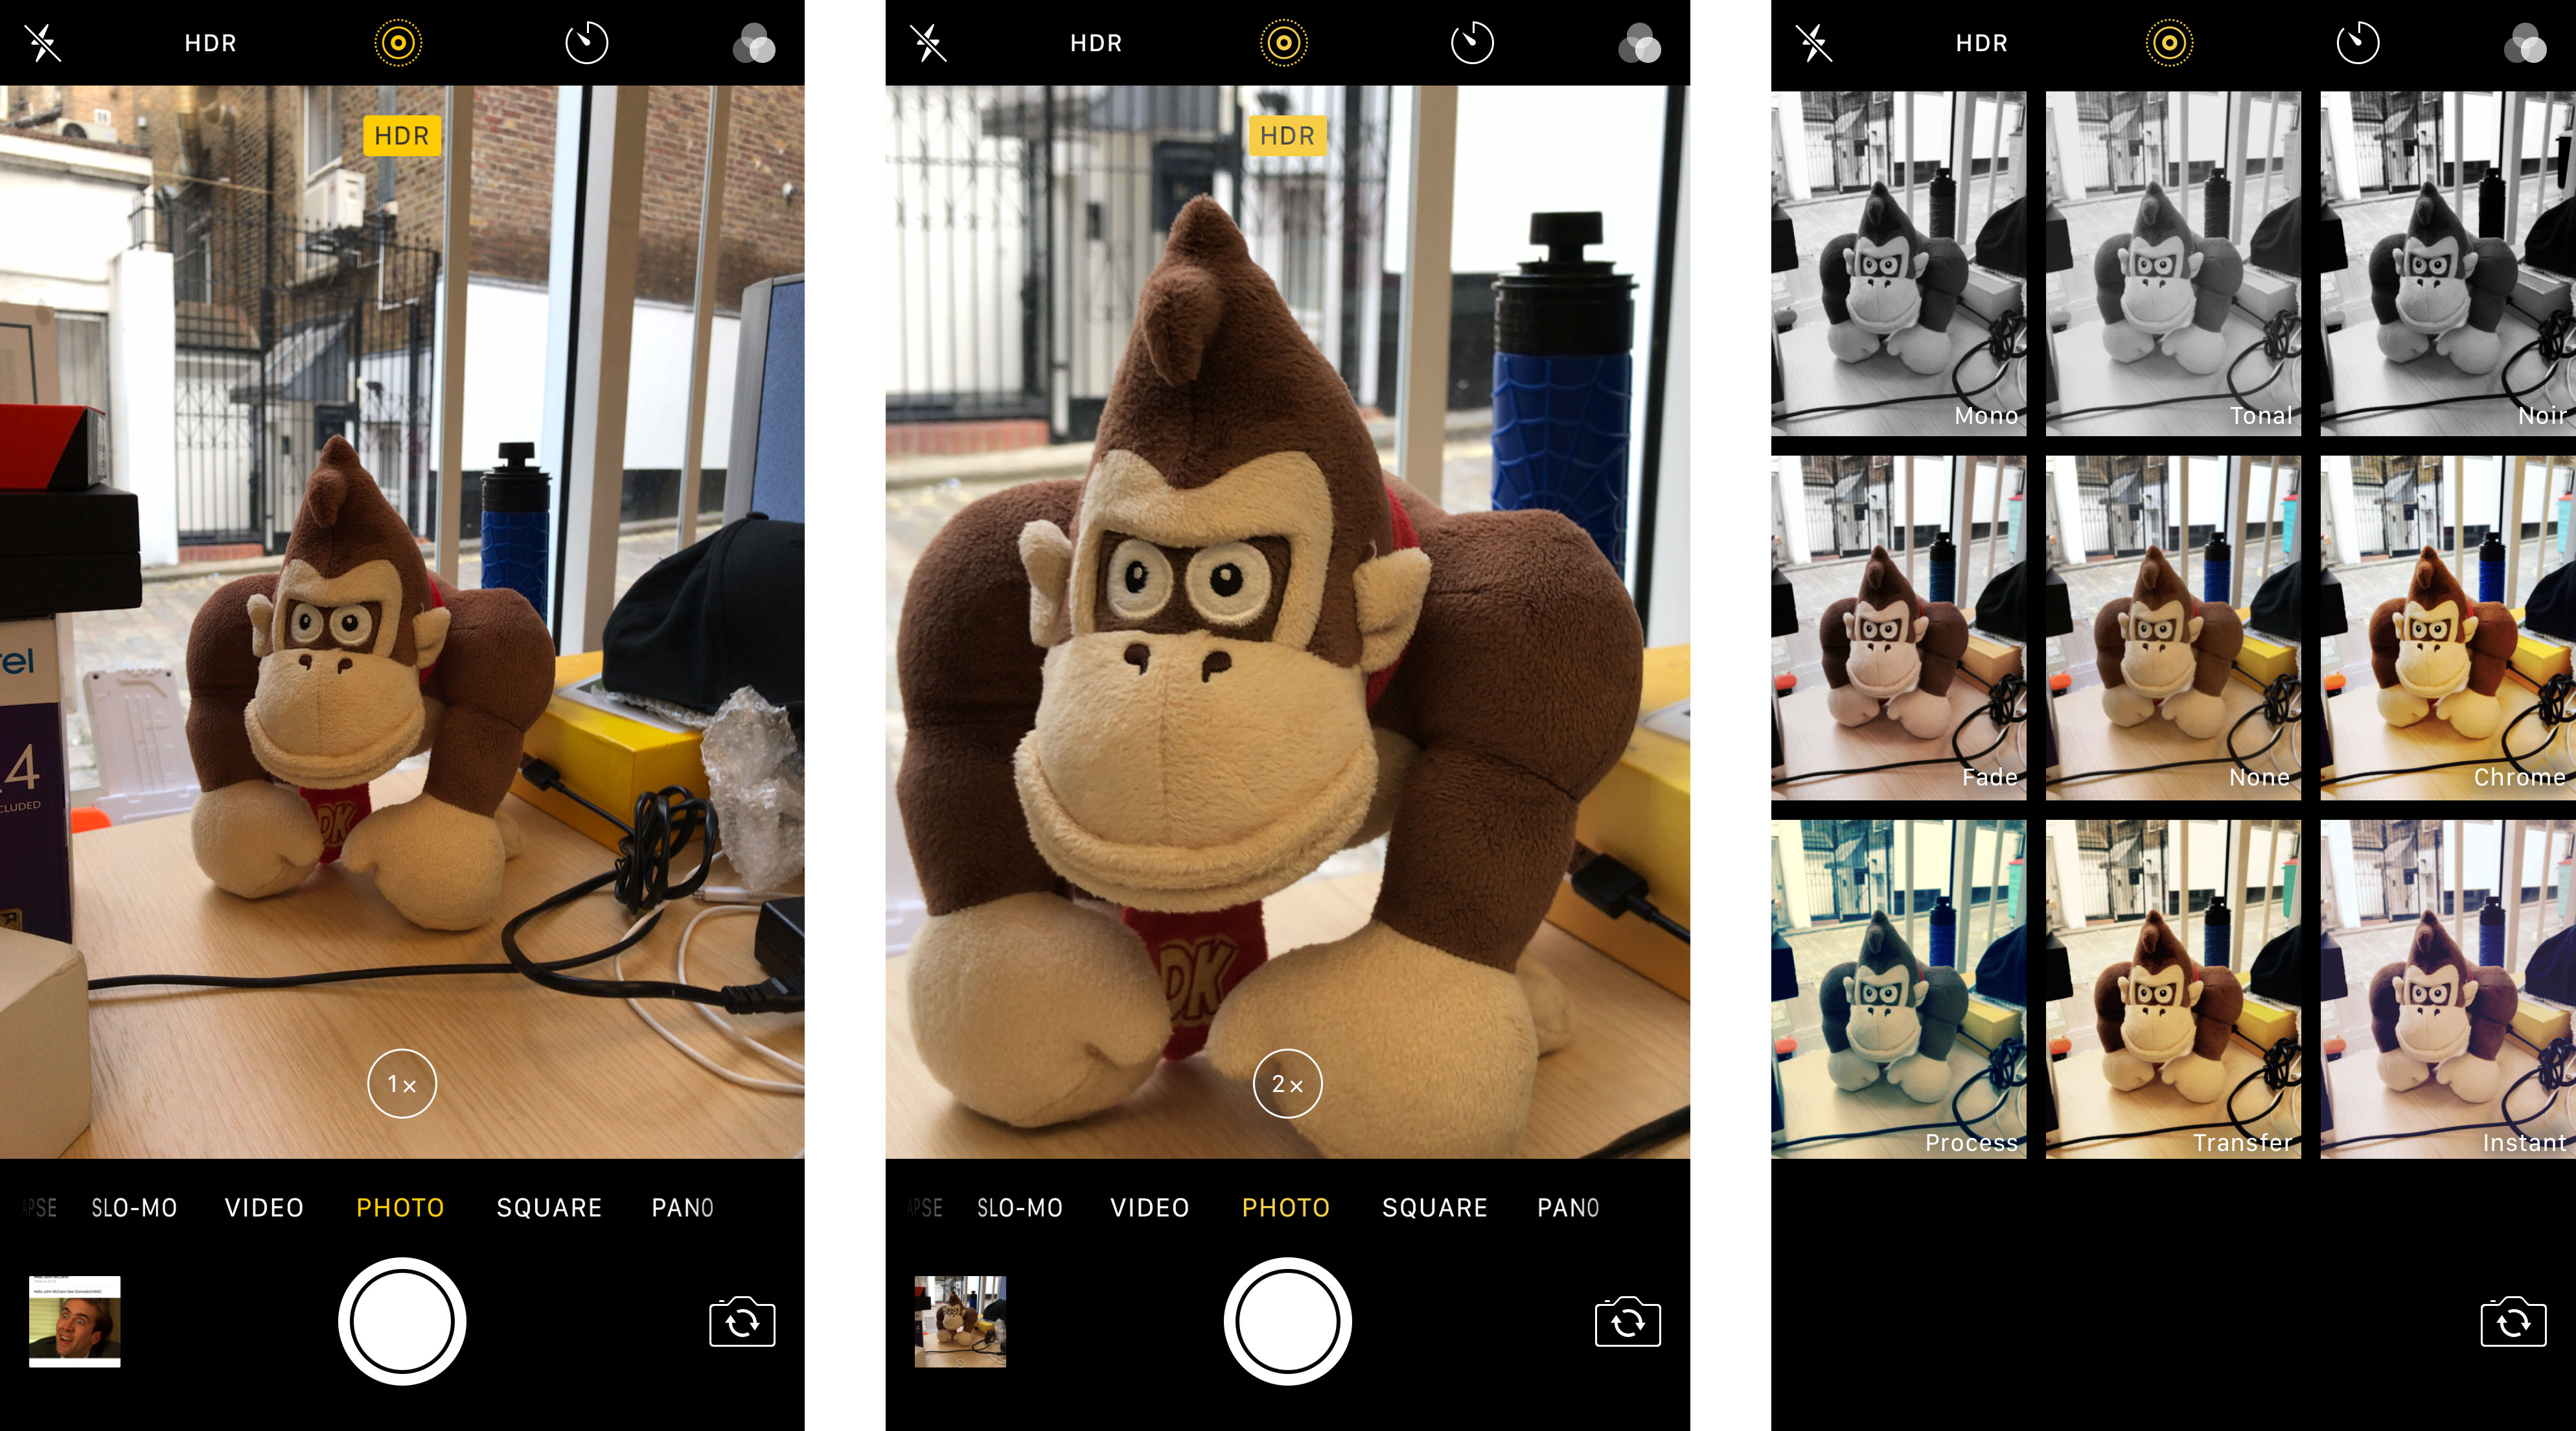 Camera - iPhone 7 Plus review | TechRadar